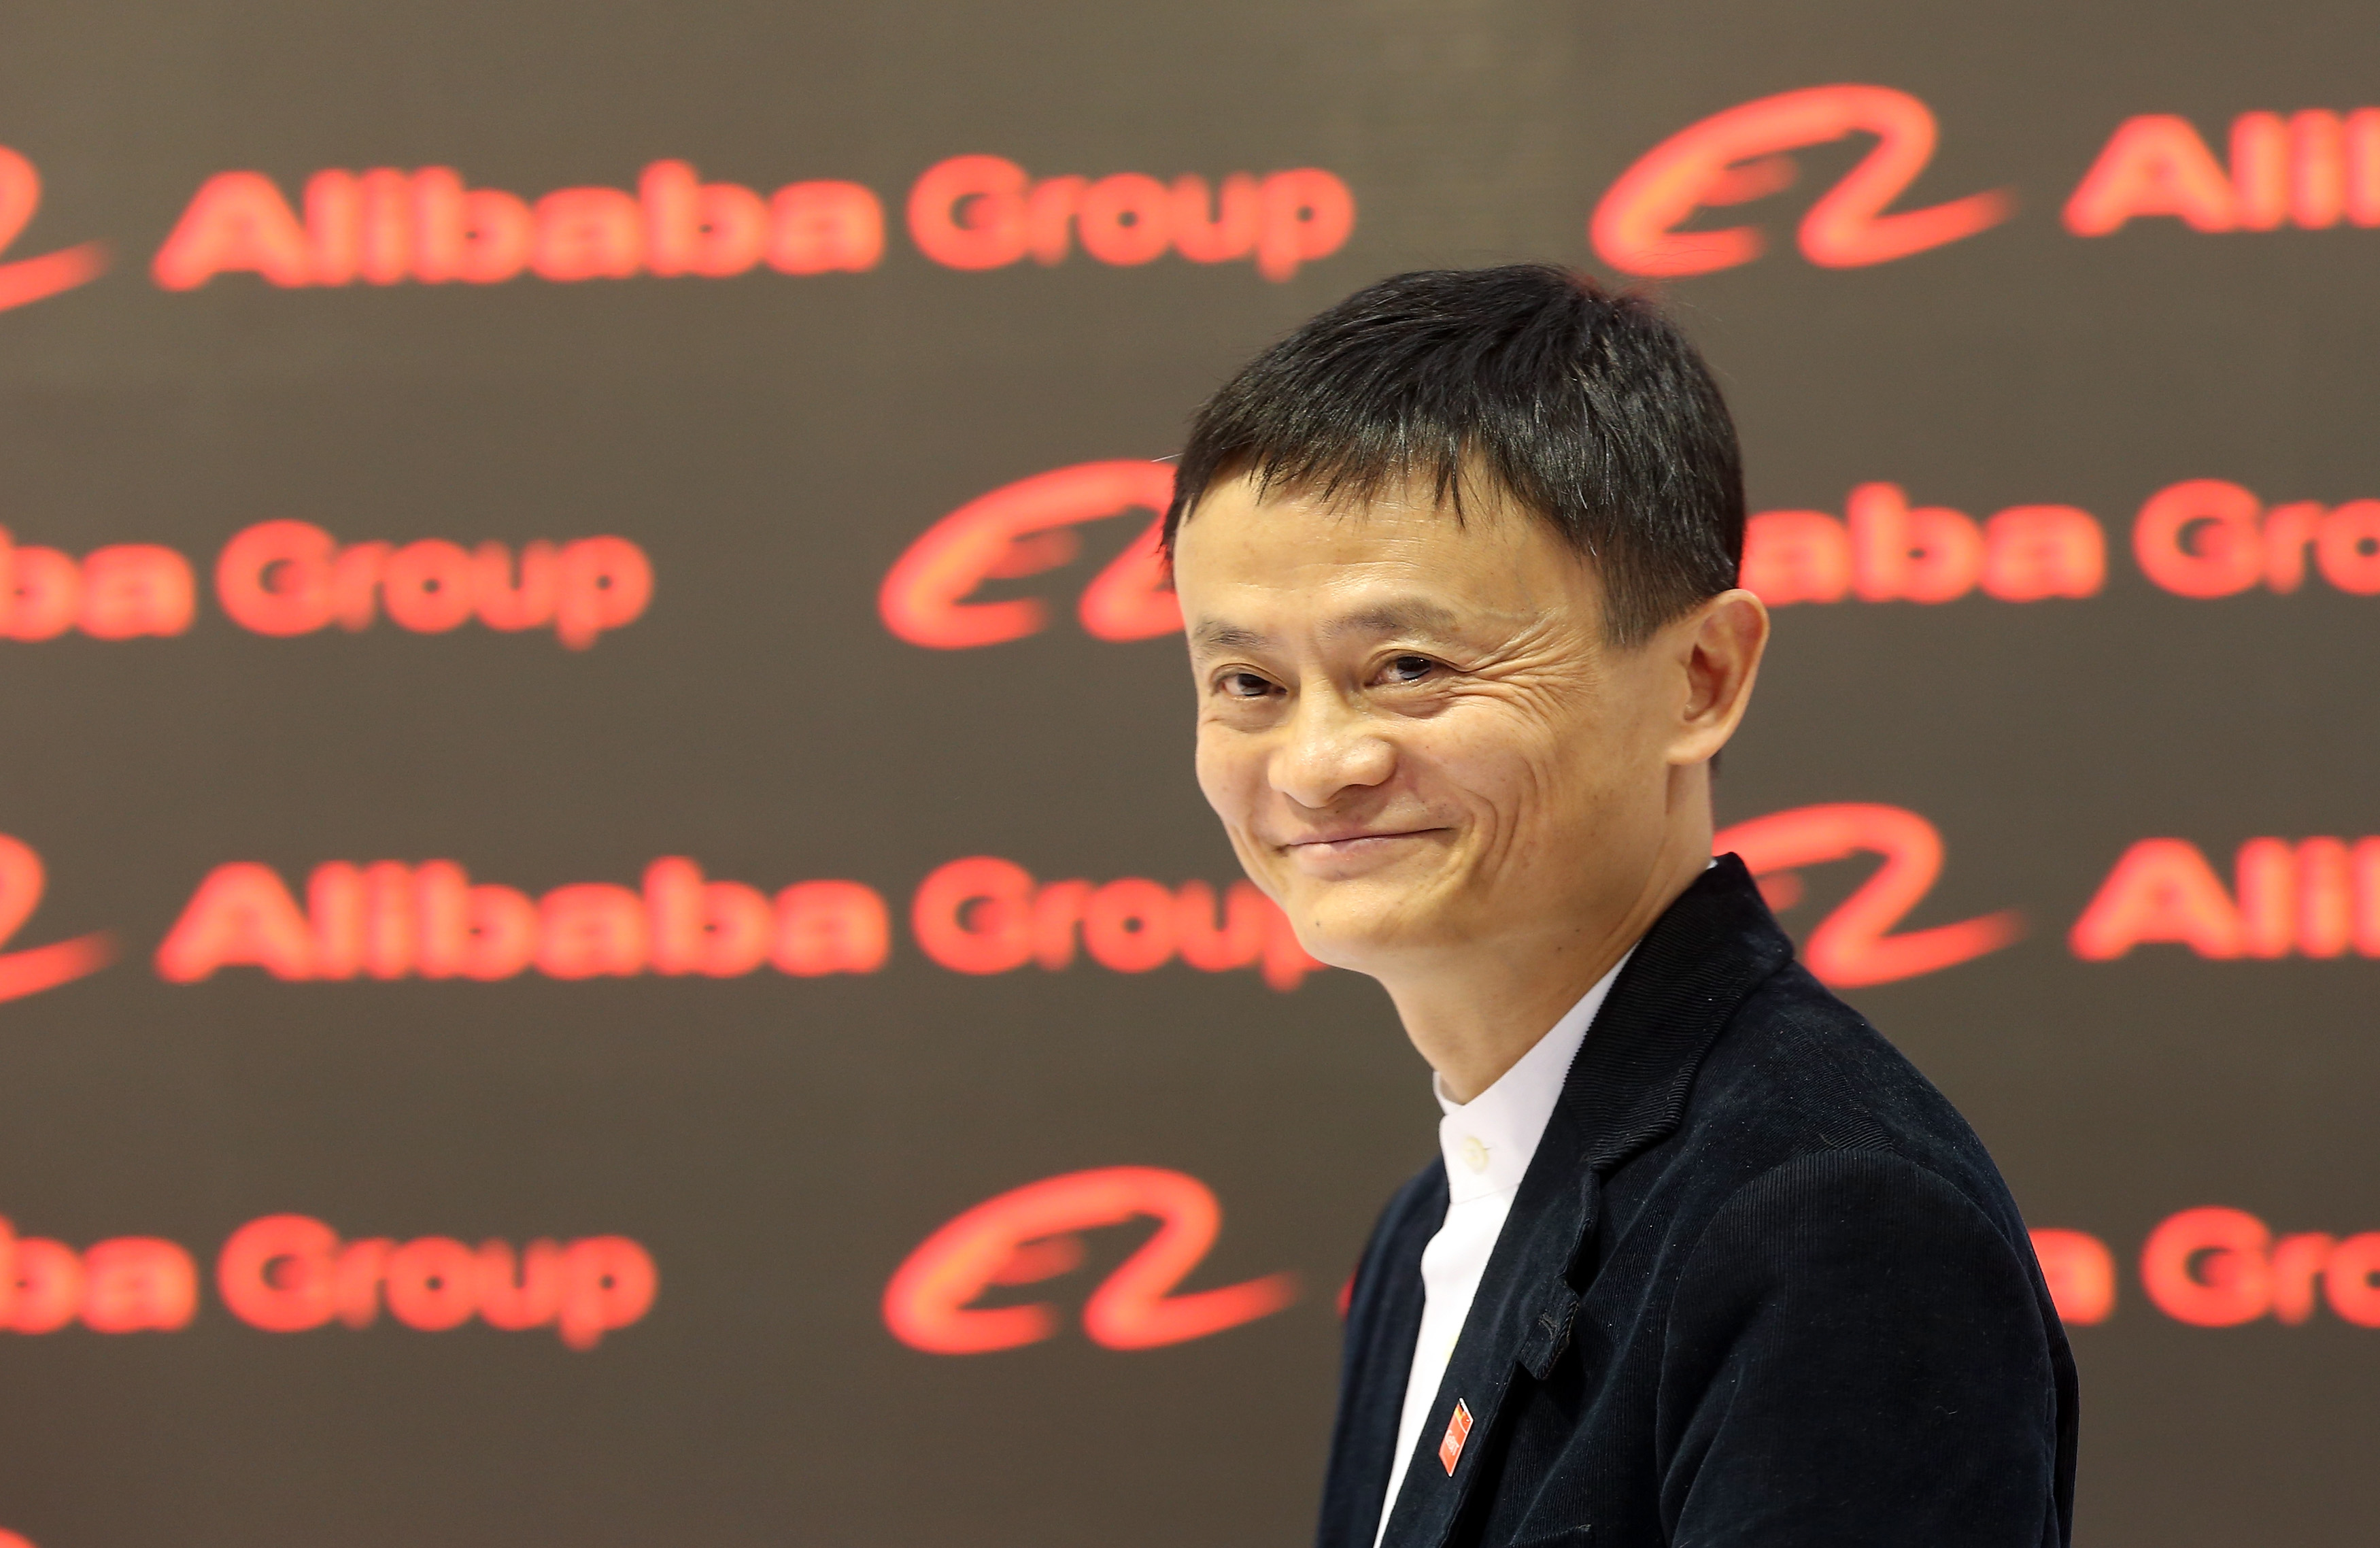 Jack Ma Alibaba Founder's Net Worth Rose 2.8 Billion Money